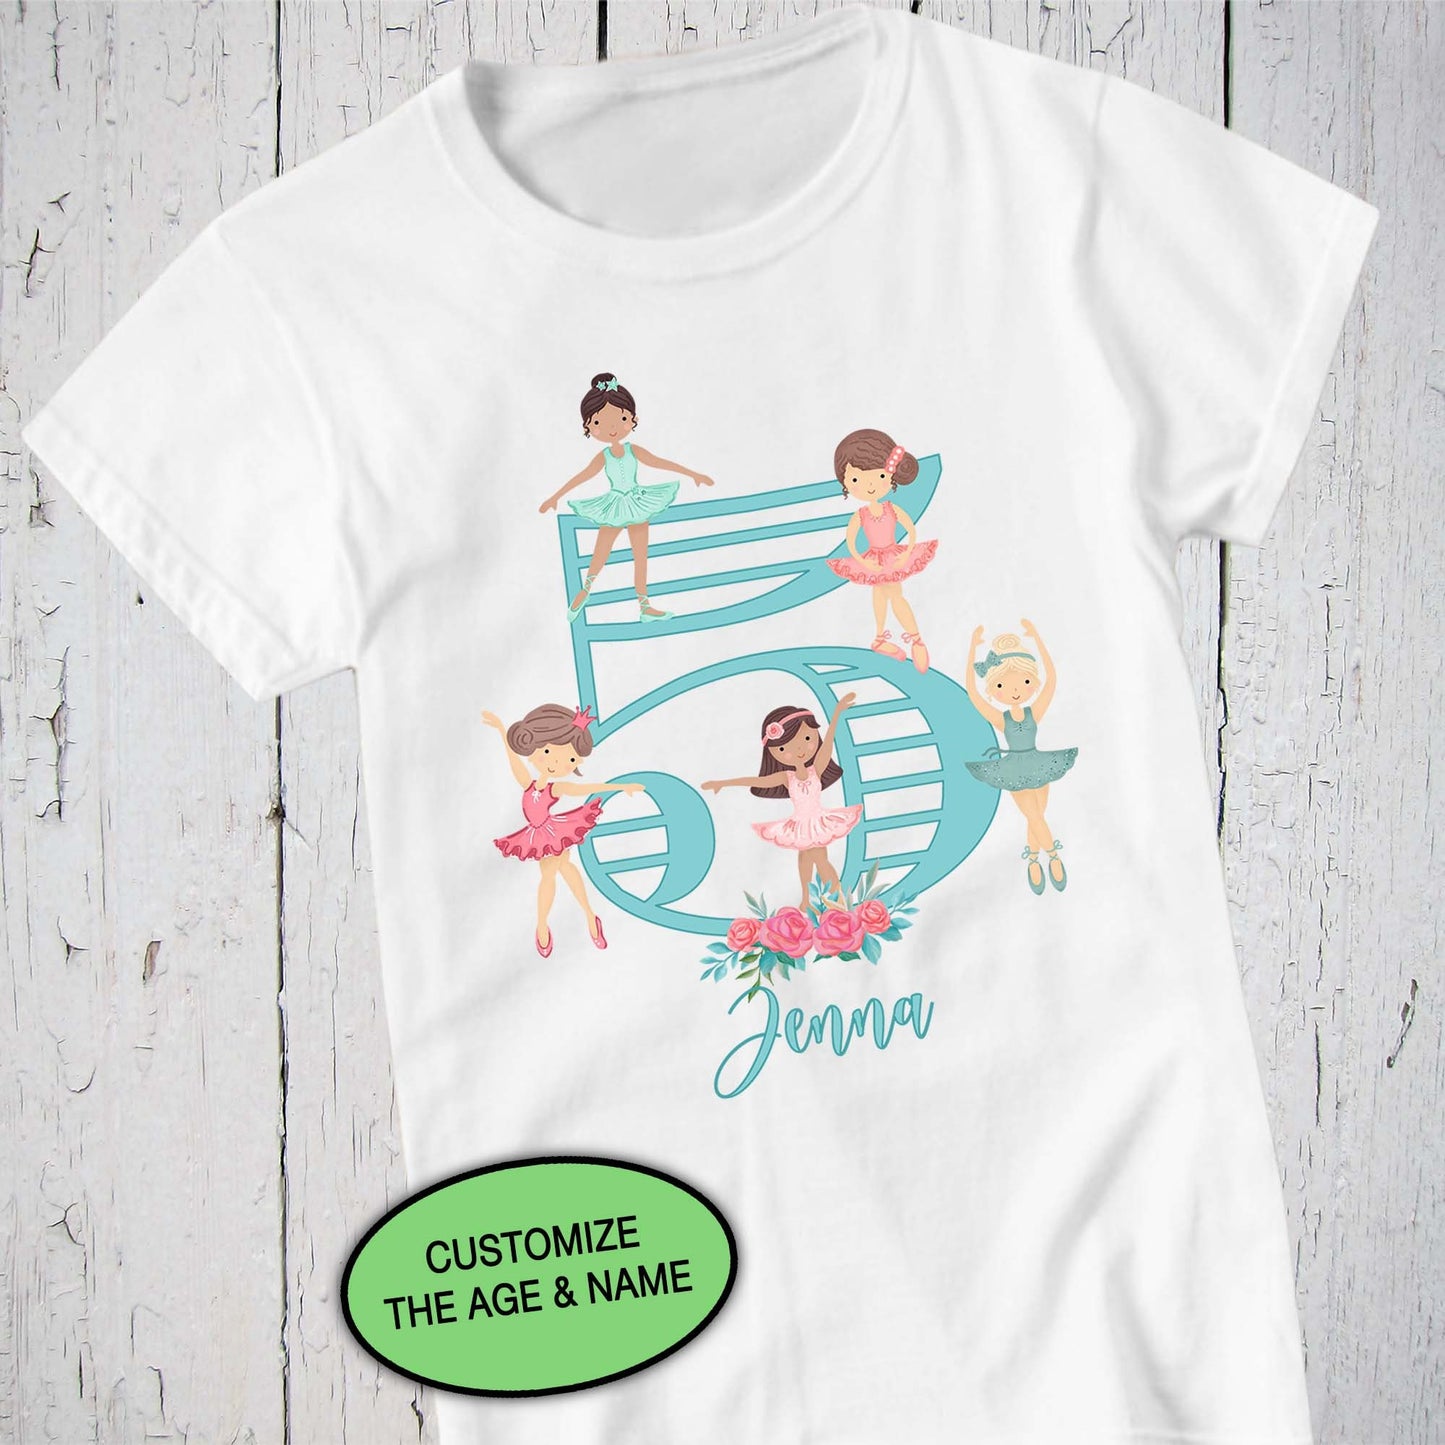 Dancer Birthday Shirt, Girls Birthday Shirt, Ballerina Shirt, Ballet Shirt, Personalized Number Shirt, Cute Girl Shirt, Customized T-shirt